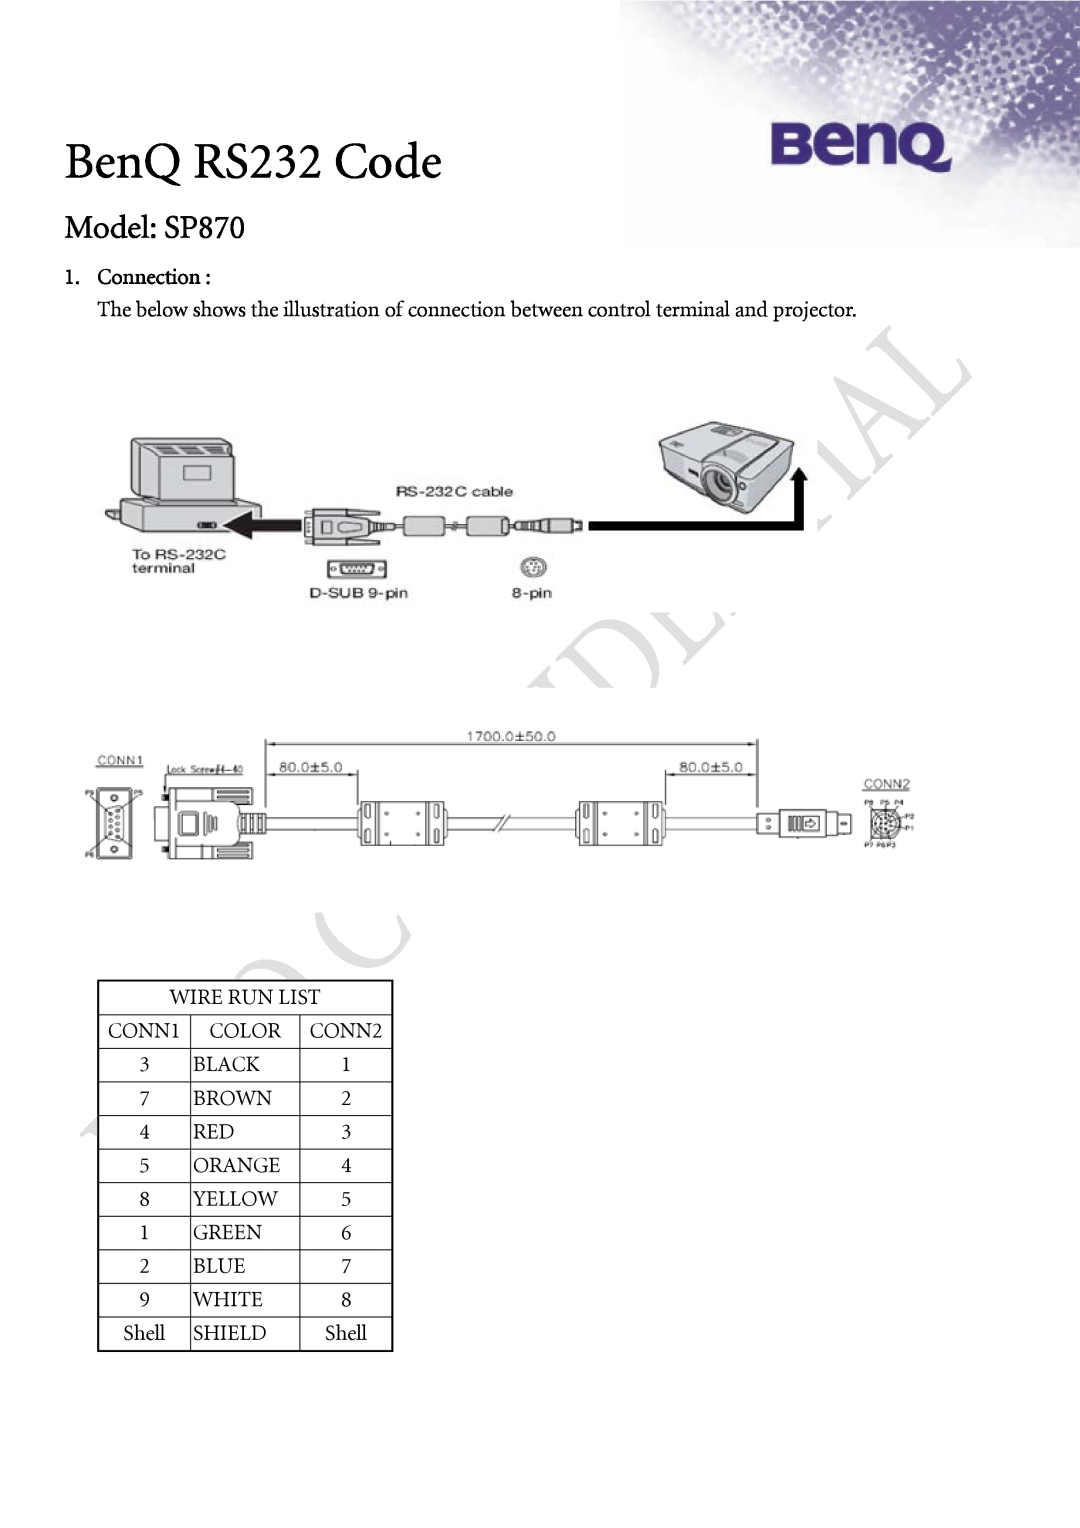 BenQ manual Connection, BenQ RS232 Code, Model SP870 